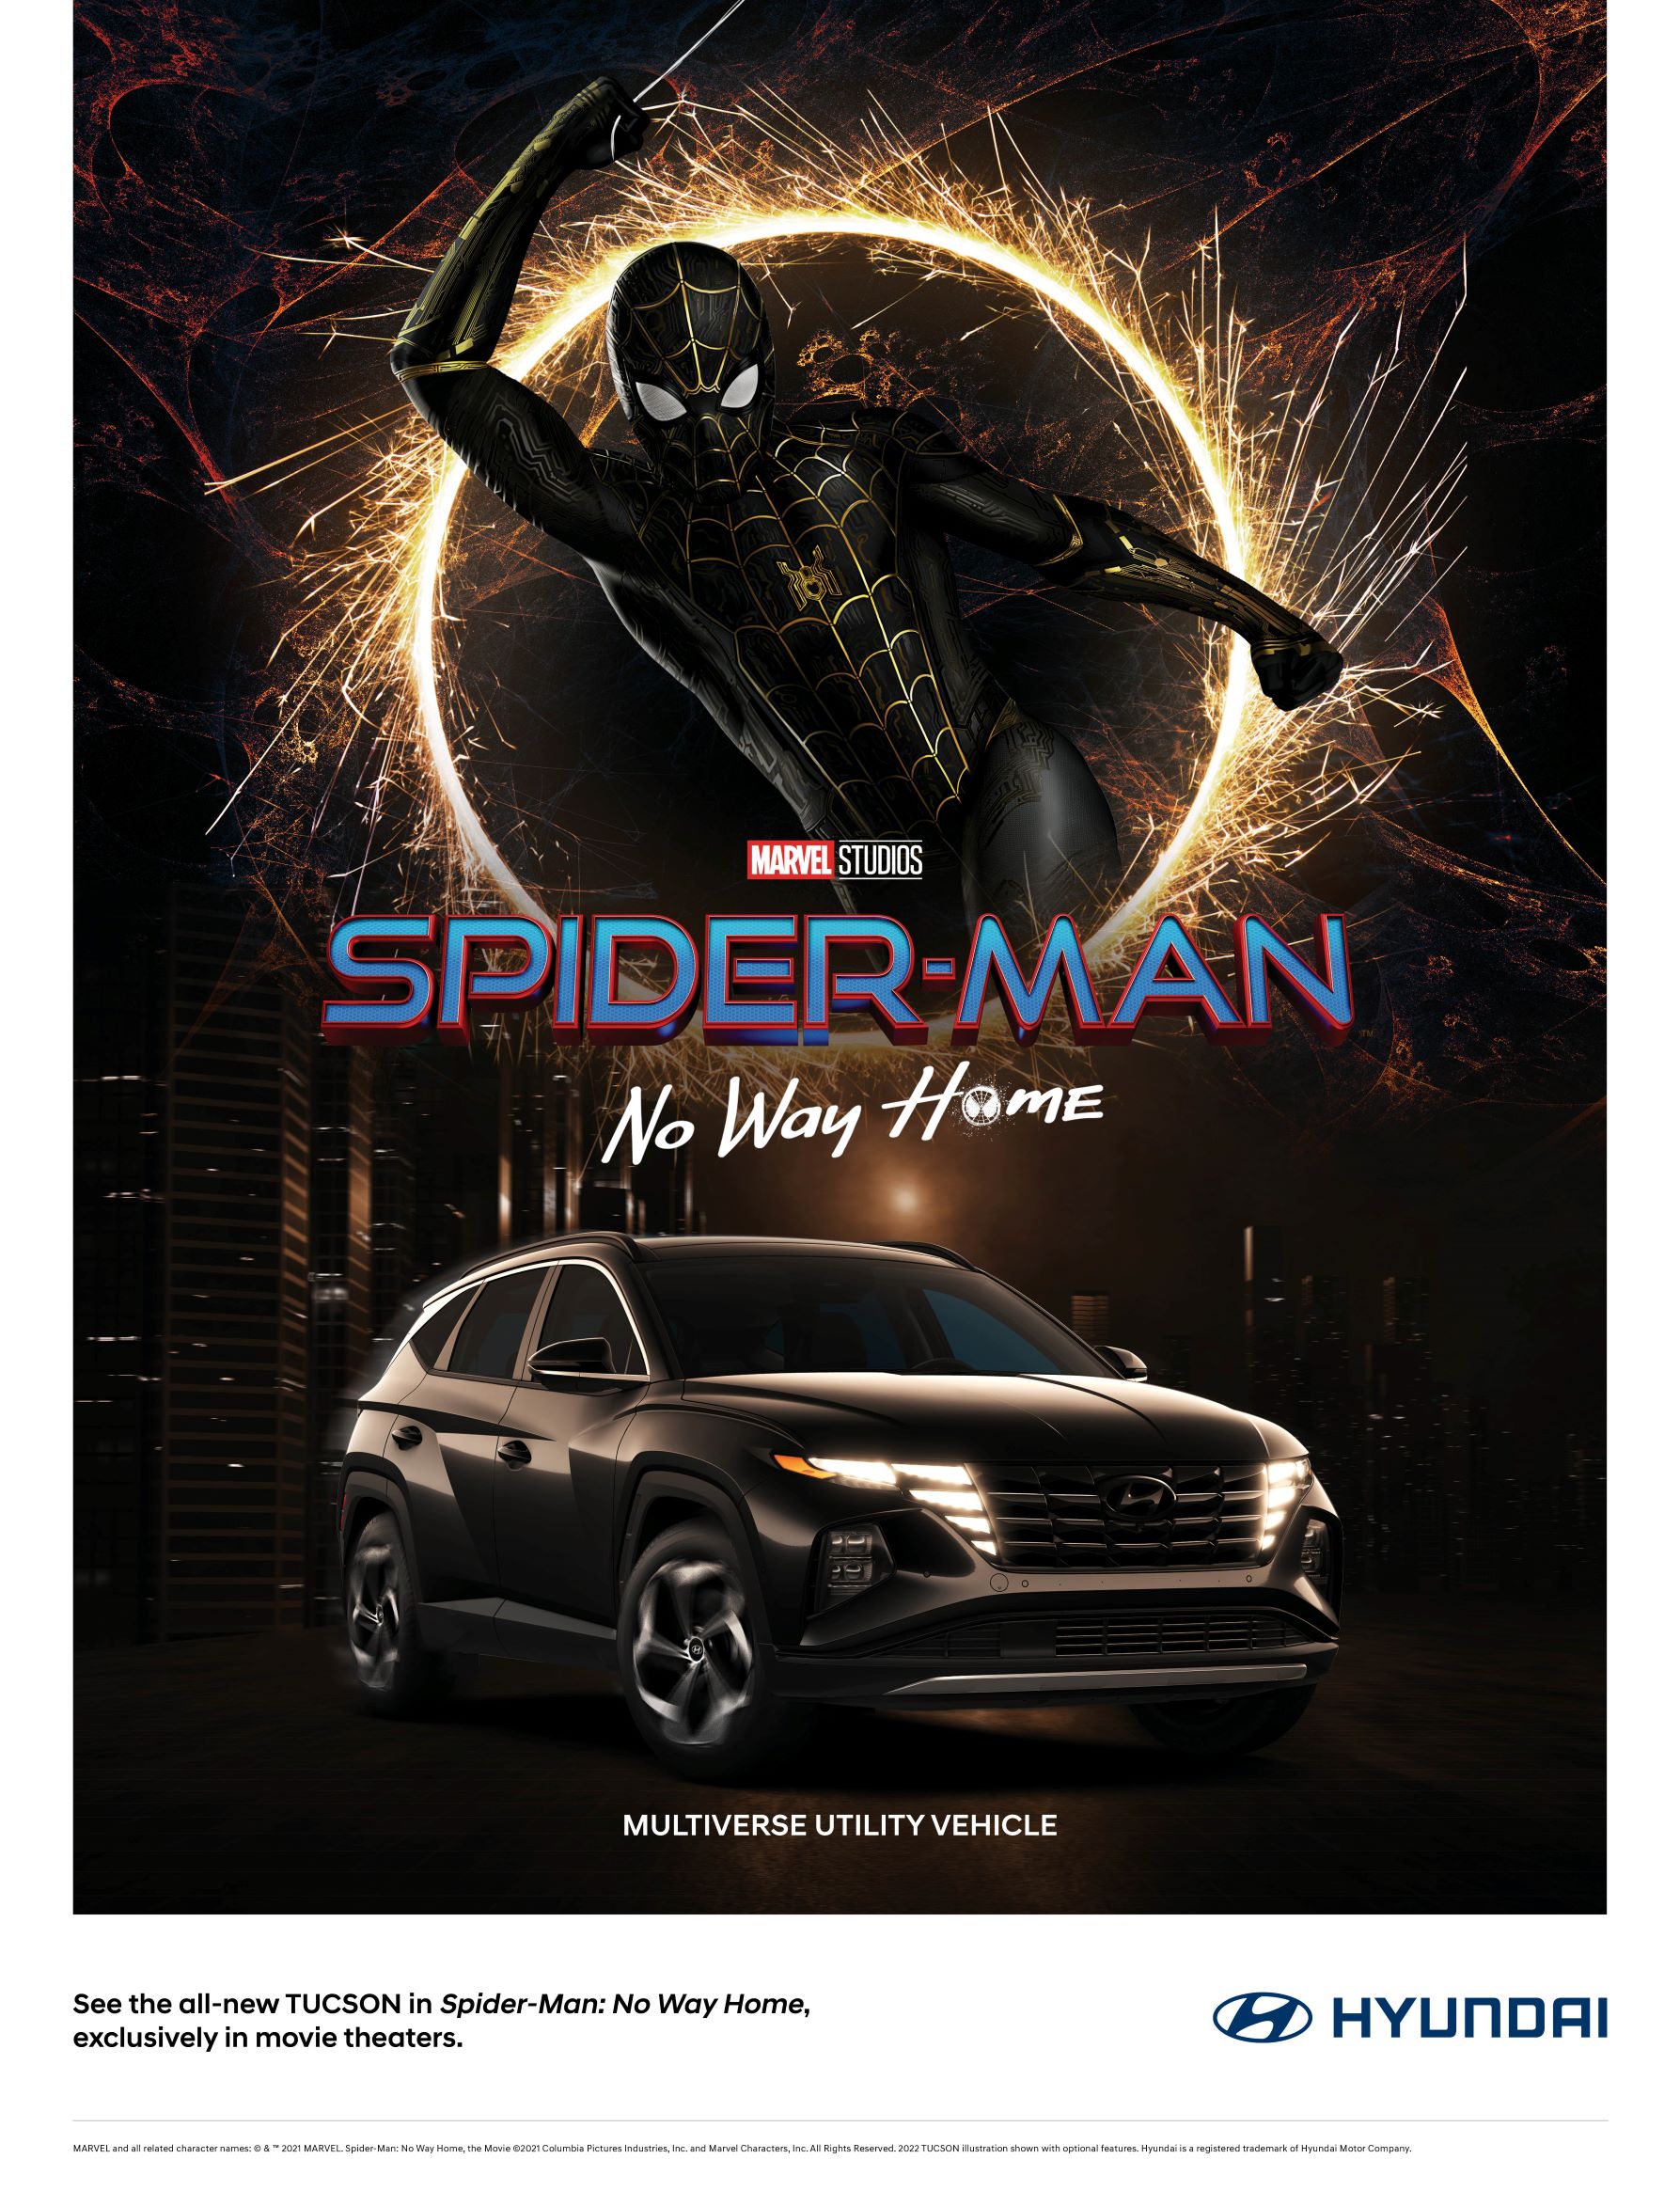 spider-man tucson poster.jpg